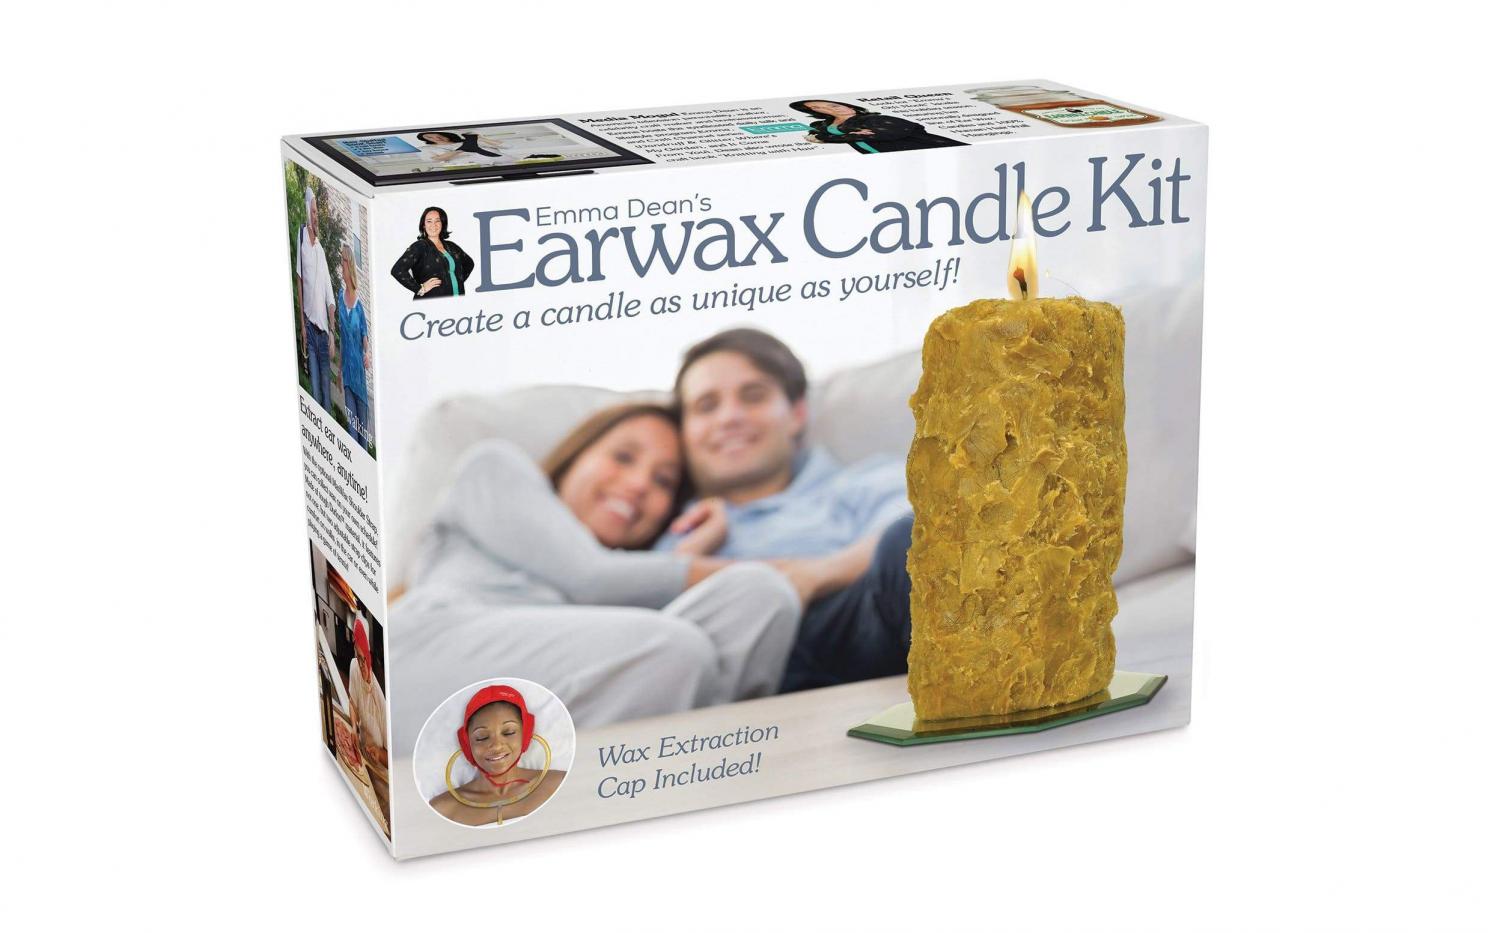 Earwax Candle Kit Prank Box